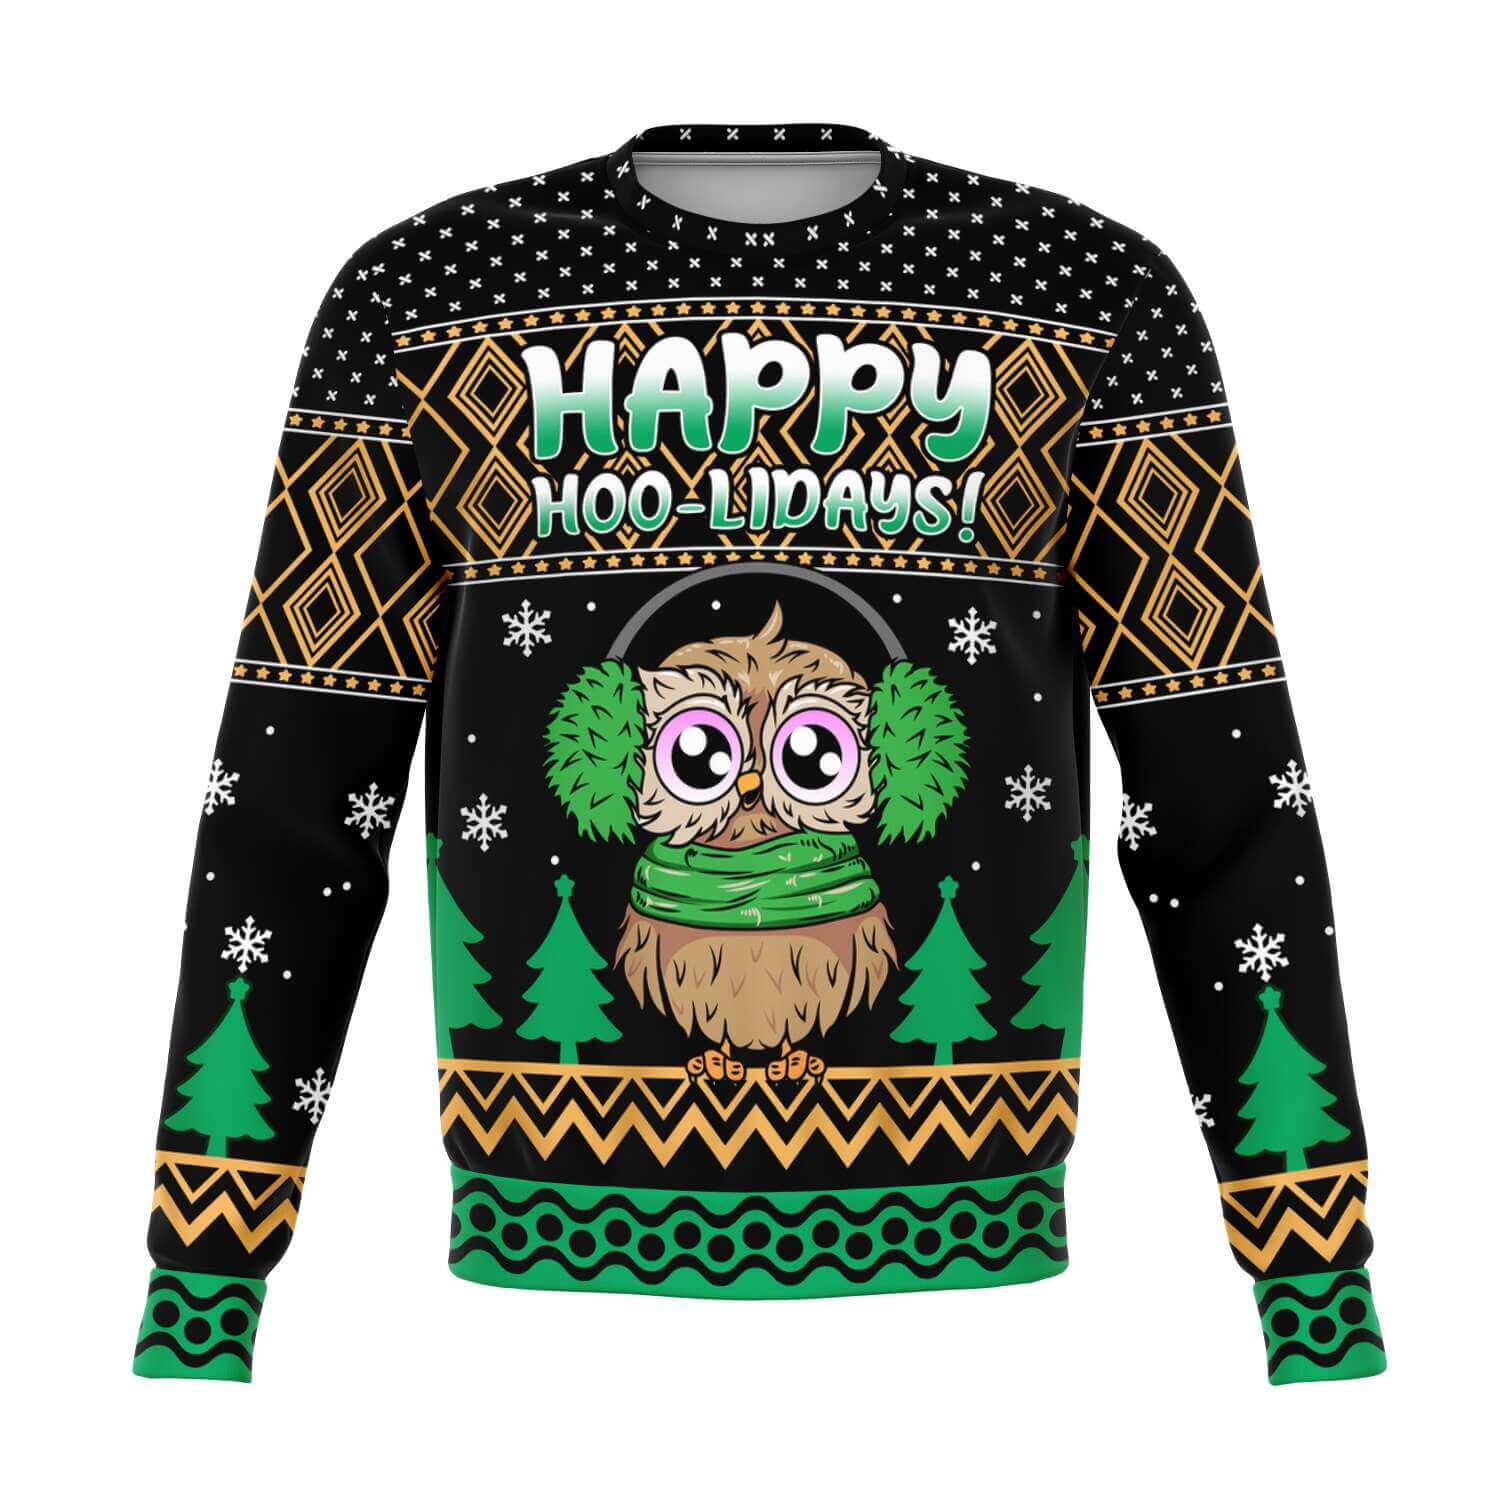 Happy-Hoo-lidays-Athletic-Fashion-sweatshirt